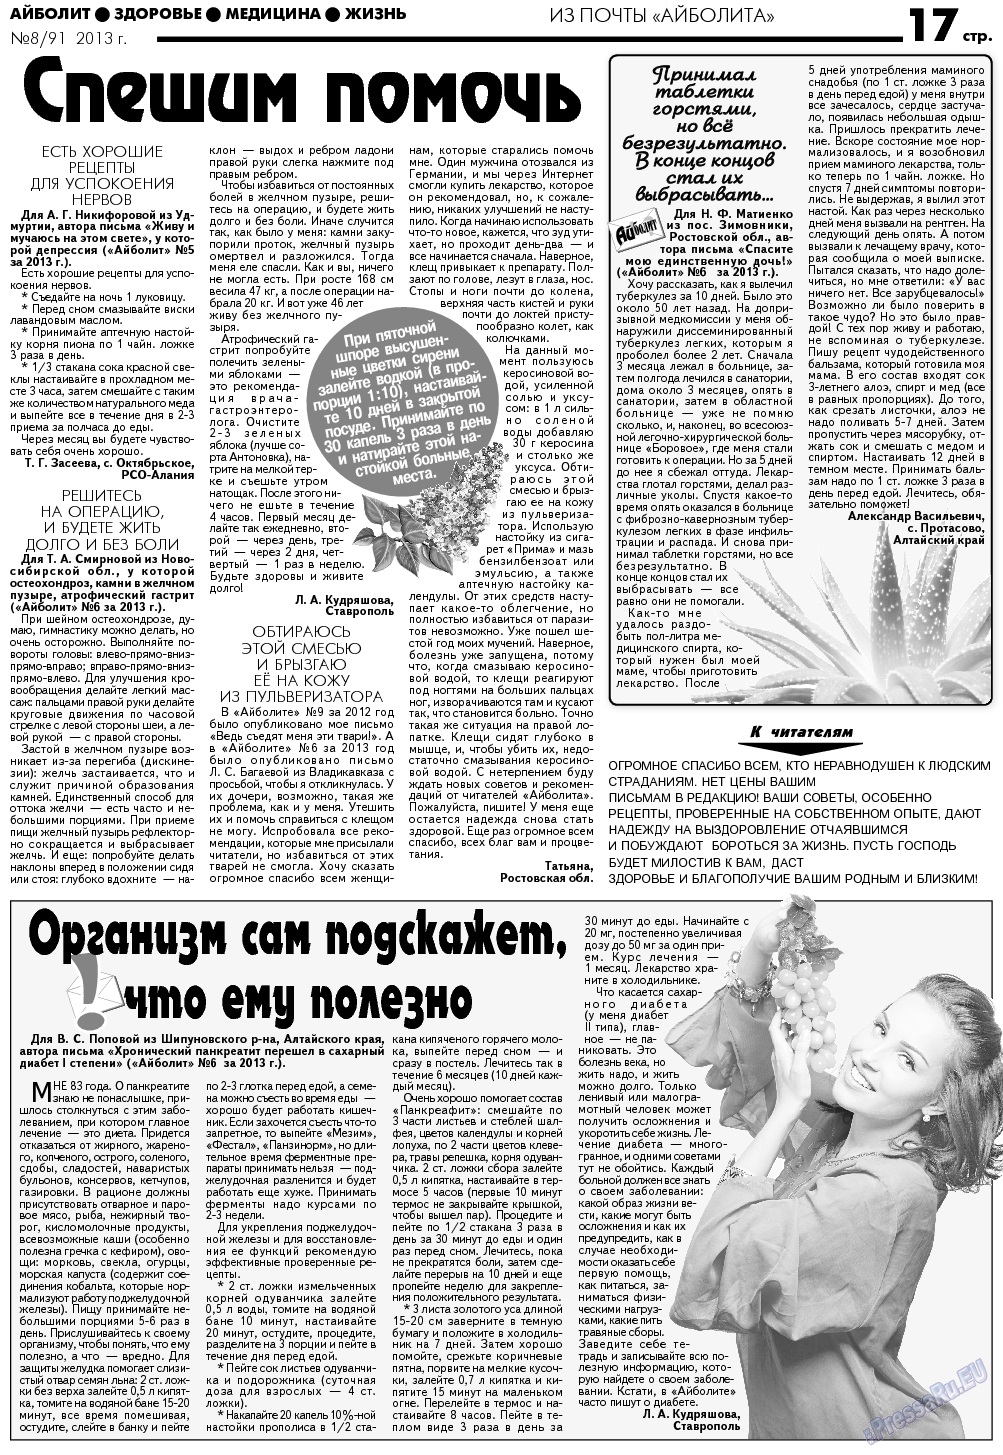 АйБолит (газета). 2013 год, номер 8, стр. 17